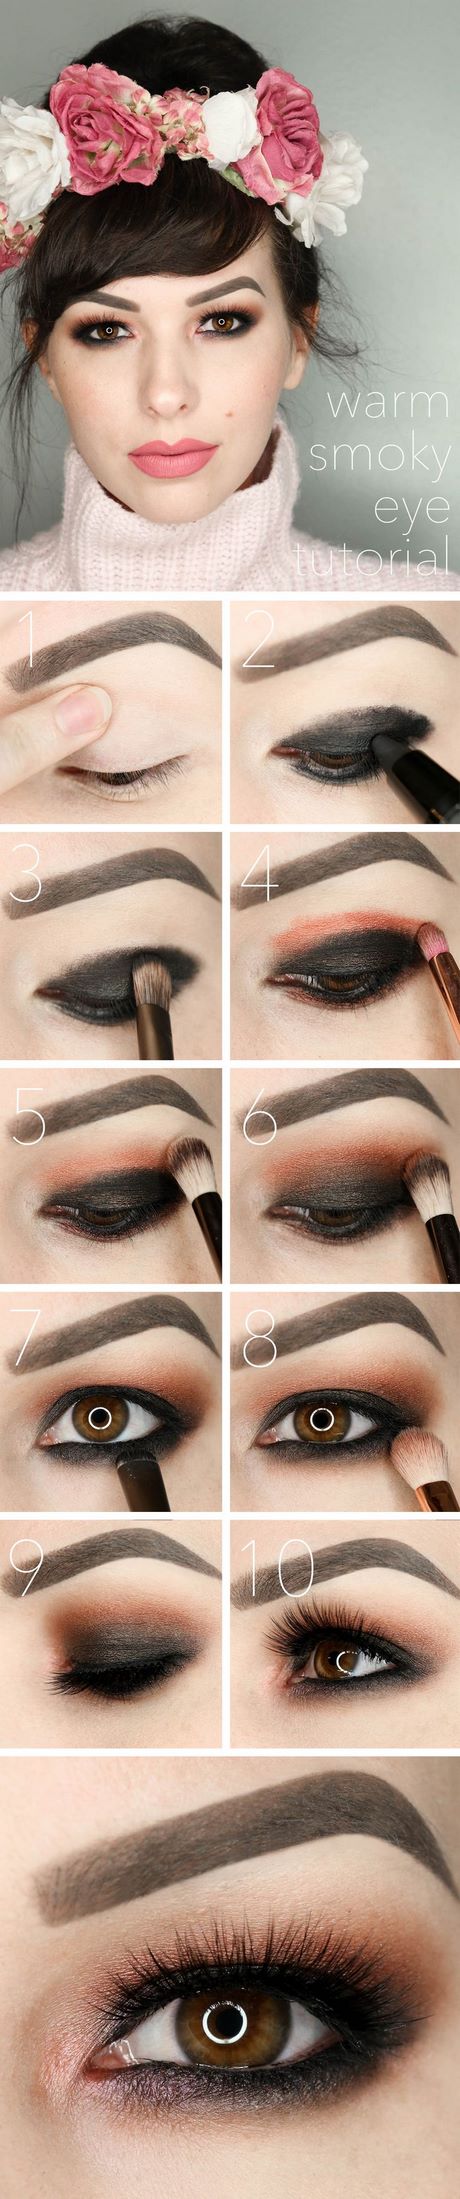 day-to-day-makeup-tutorial-14_2 Dag tot dag make-up tutorial